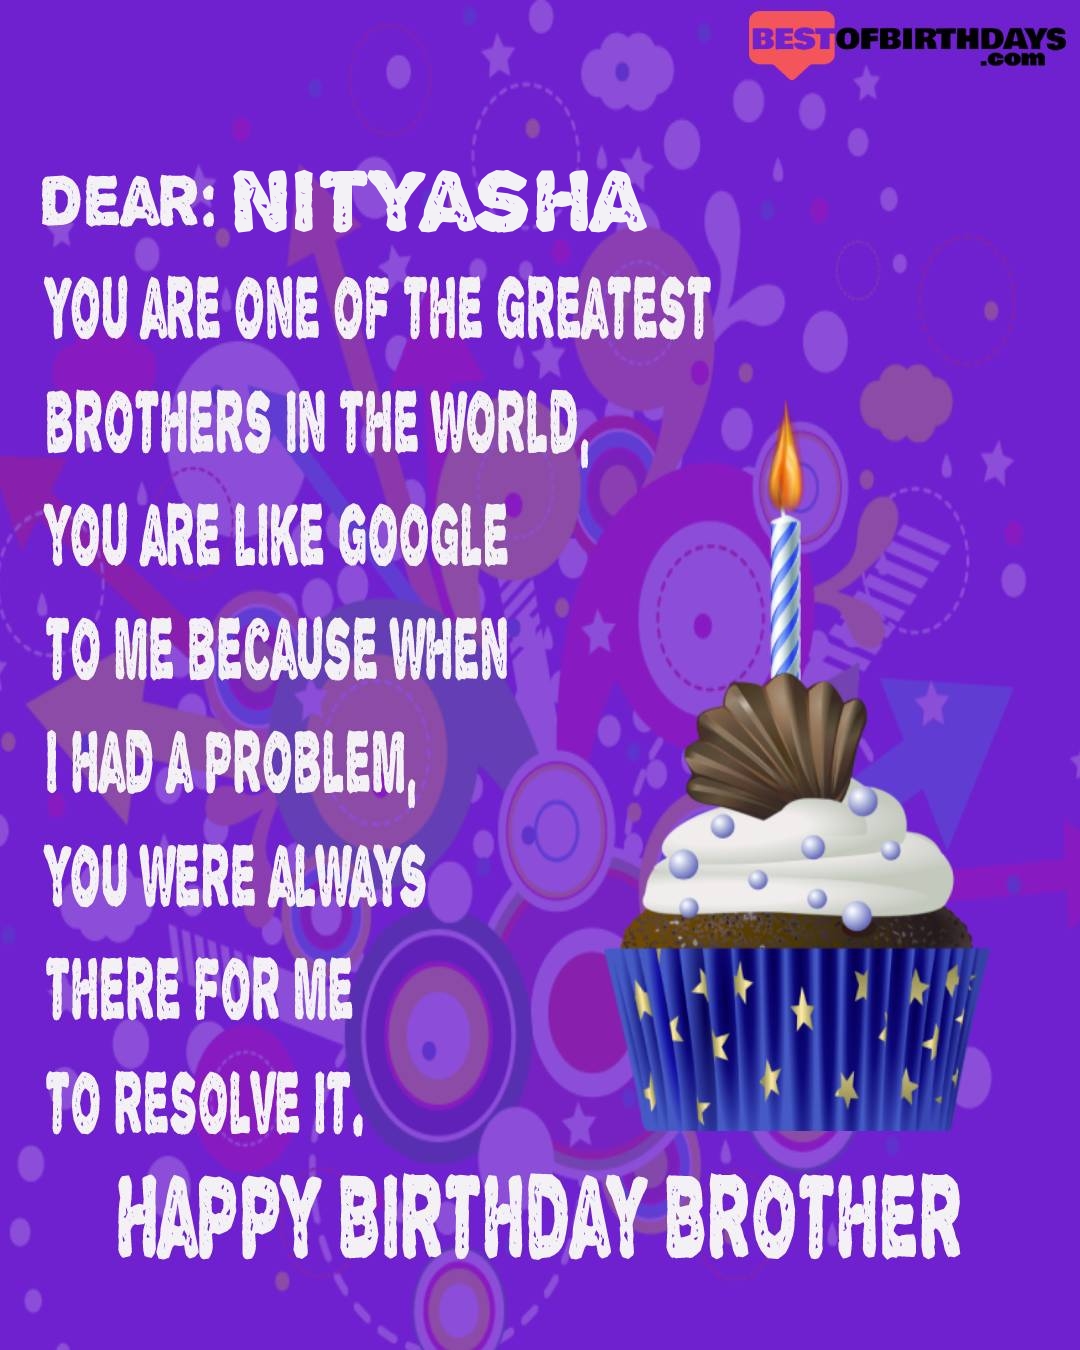 Happy birthday nityasha bhai brother bro